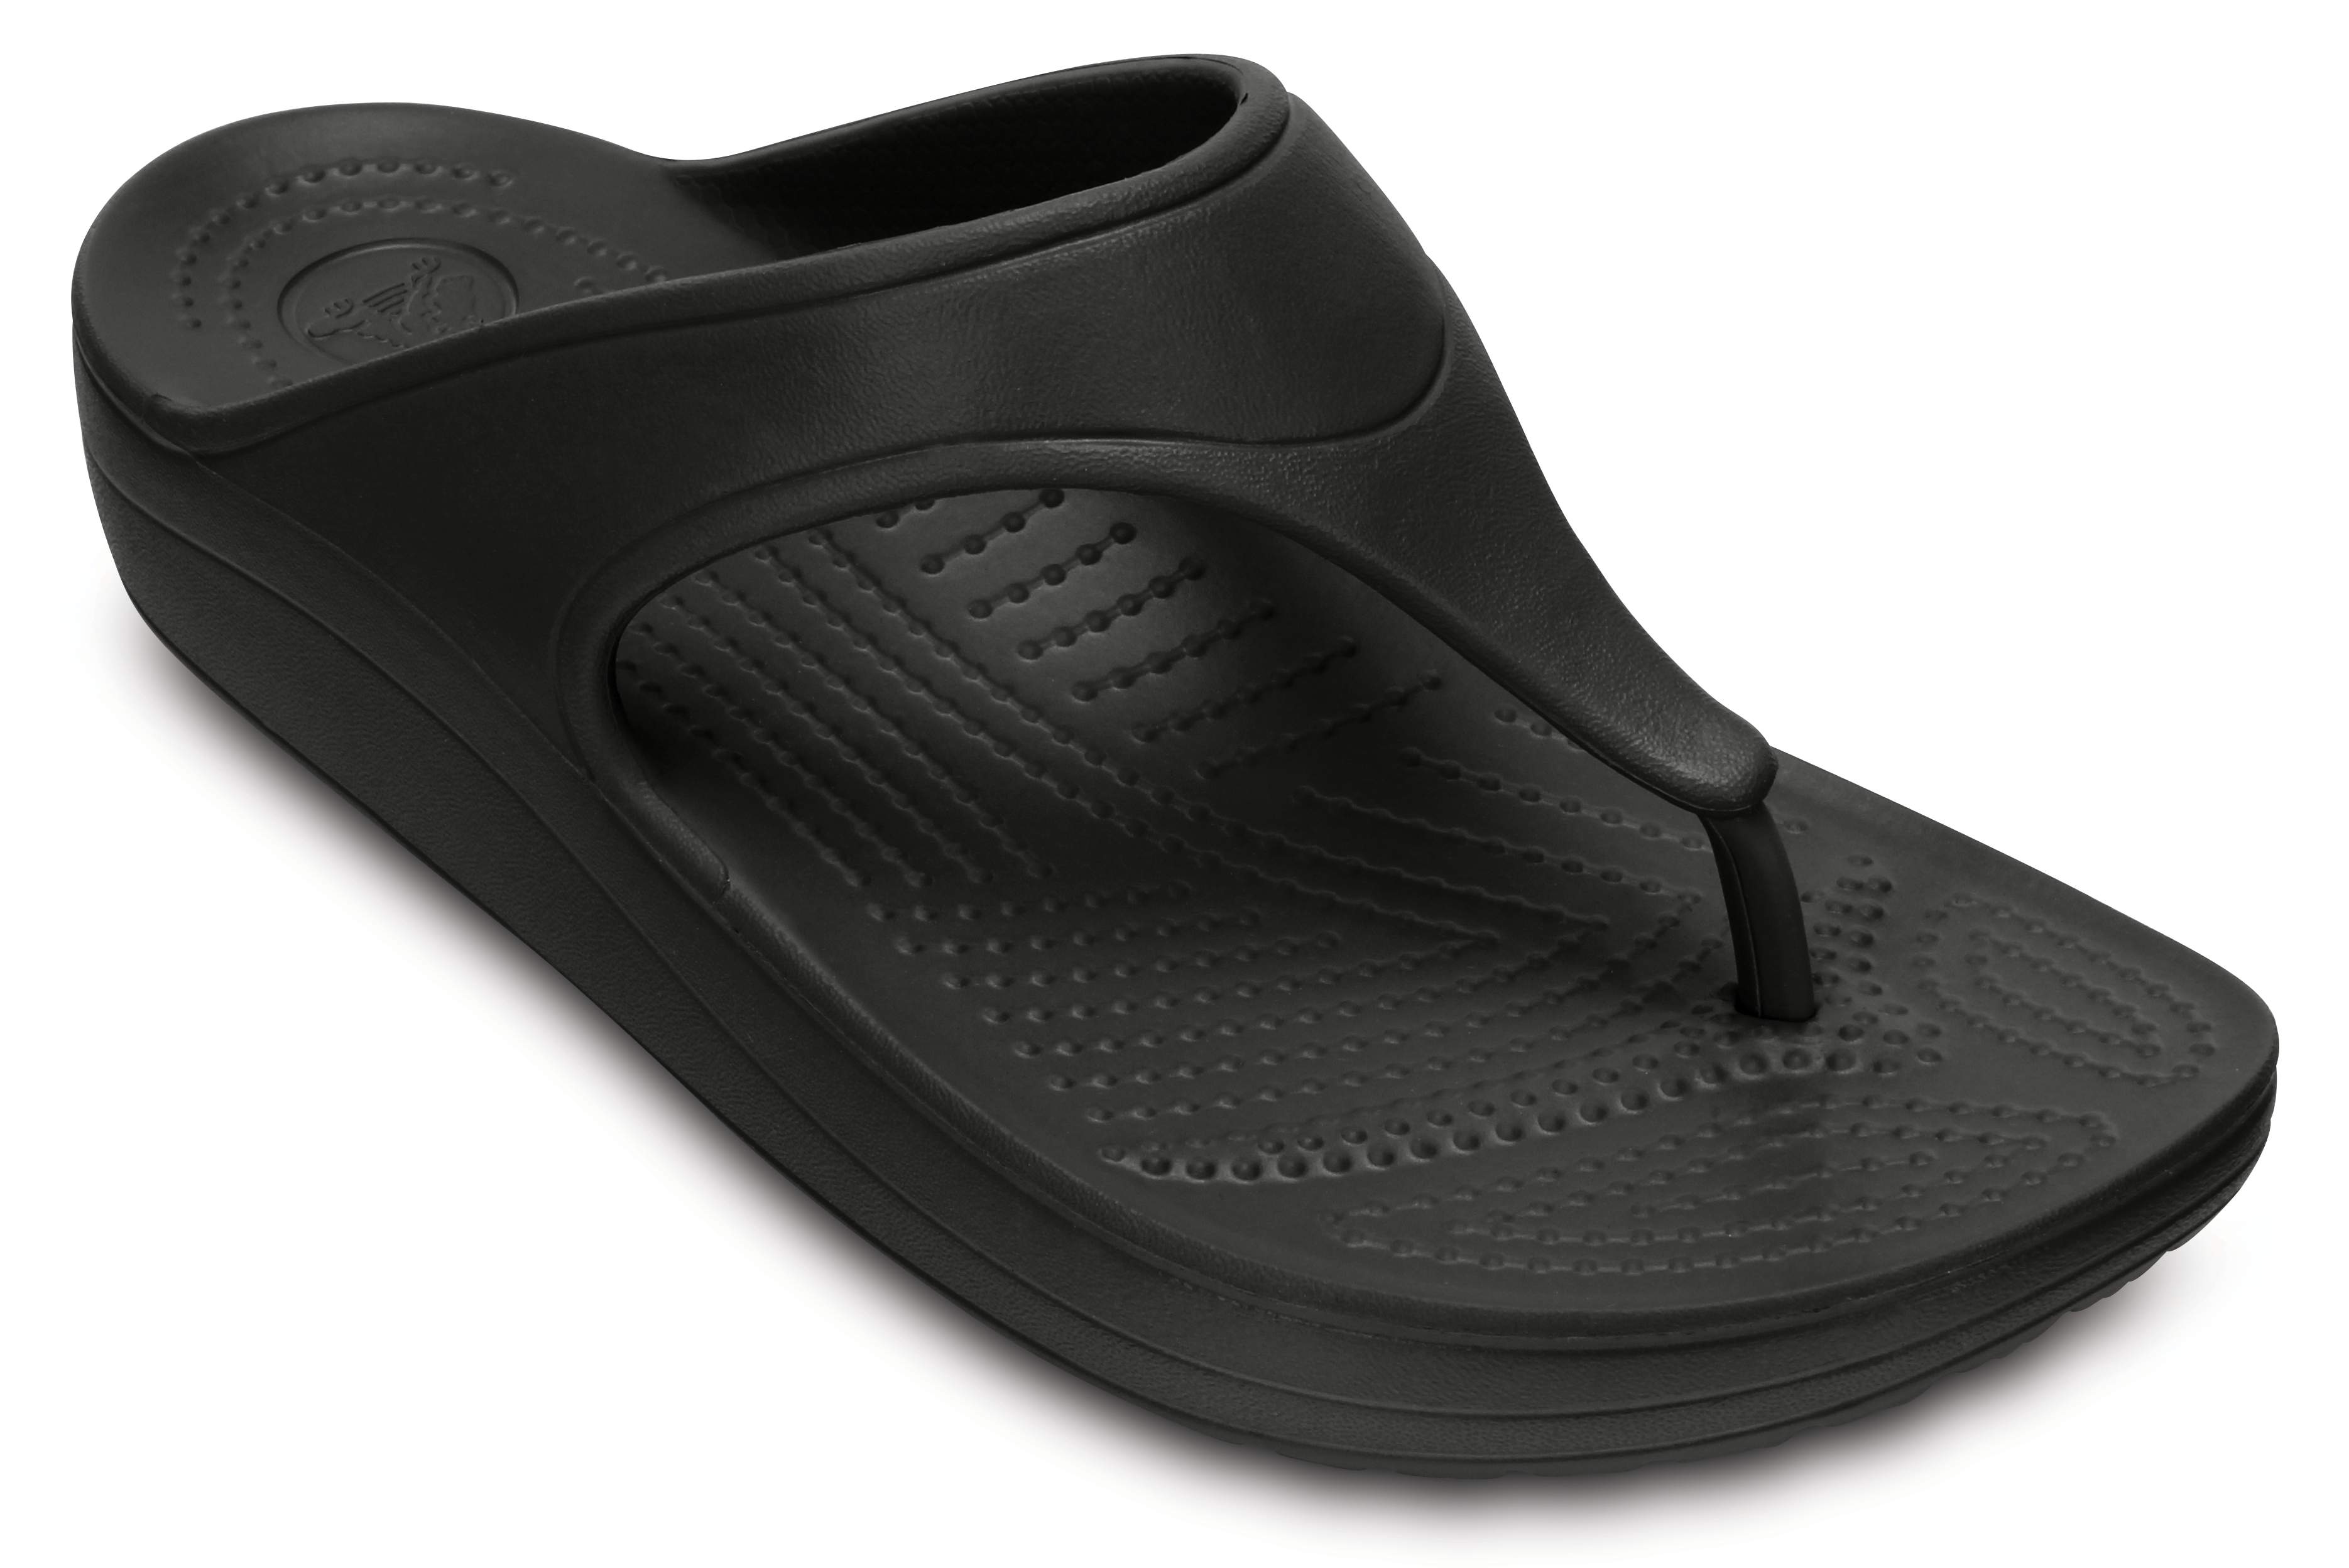 Crocs Women’s Sloane Platform Flip Flop | eBay